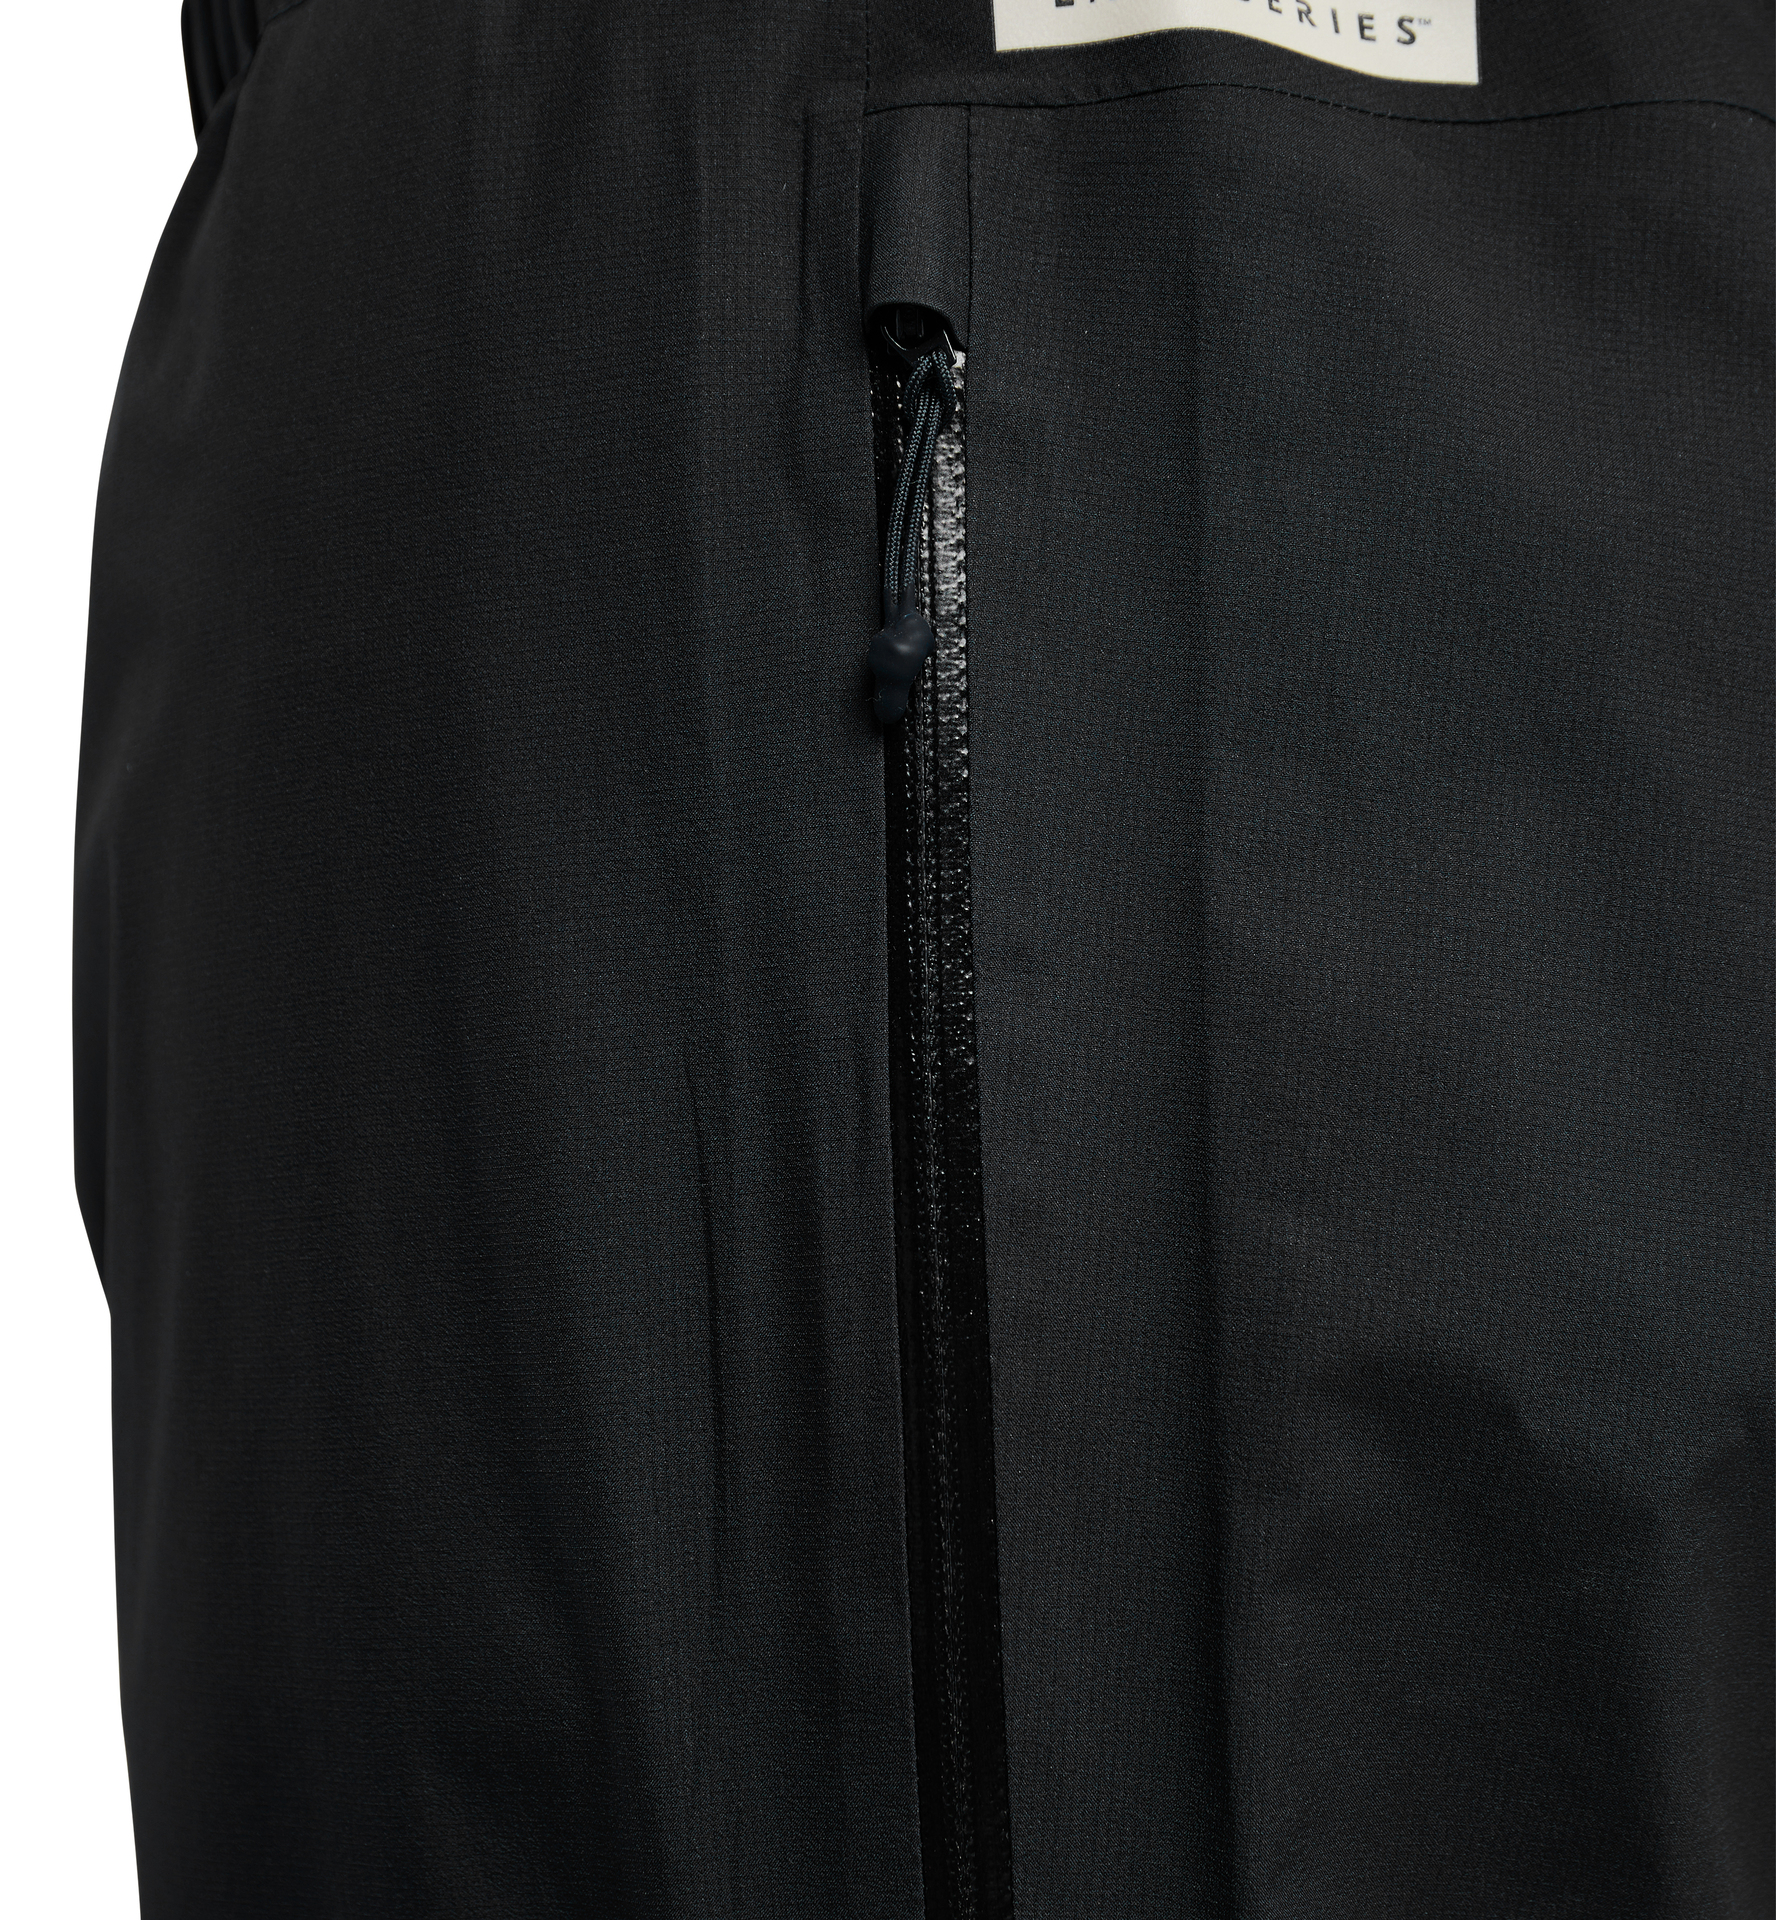 Adidas Soccer Pants With Zipper Best Sale SAVE 46  mpgcnet